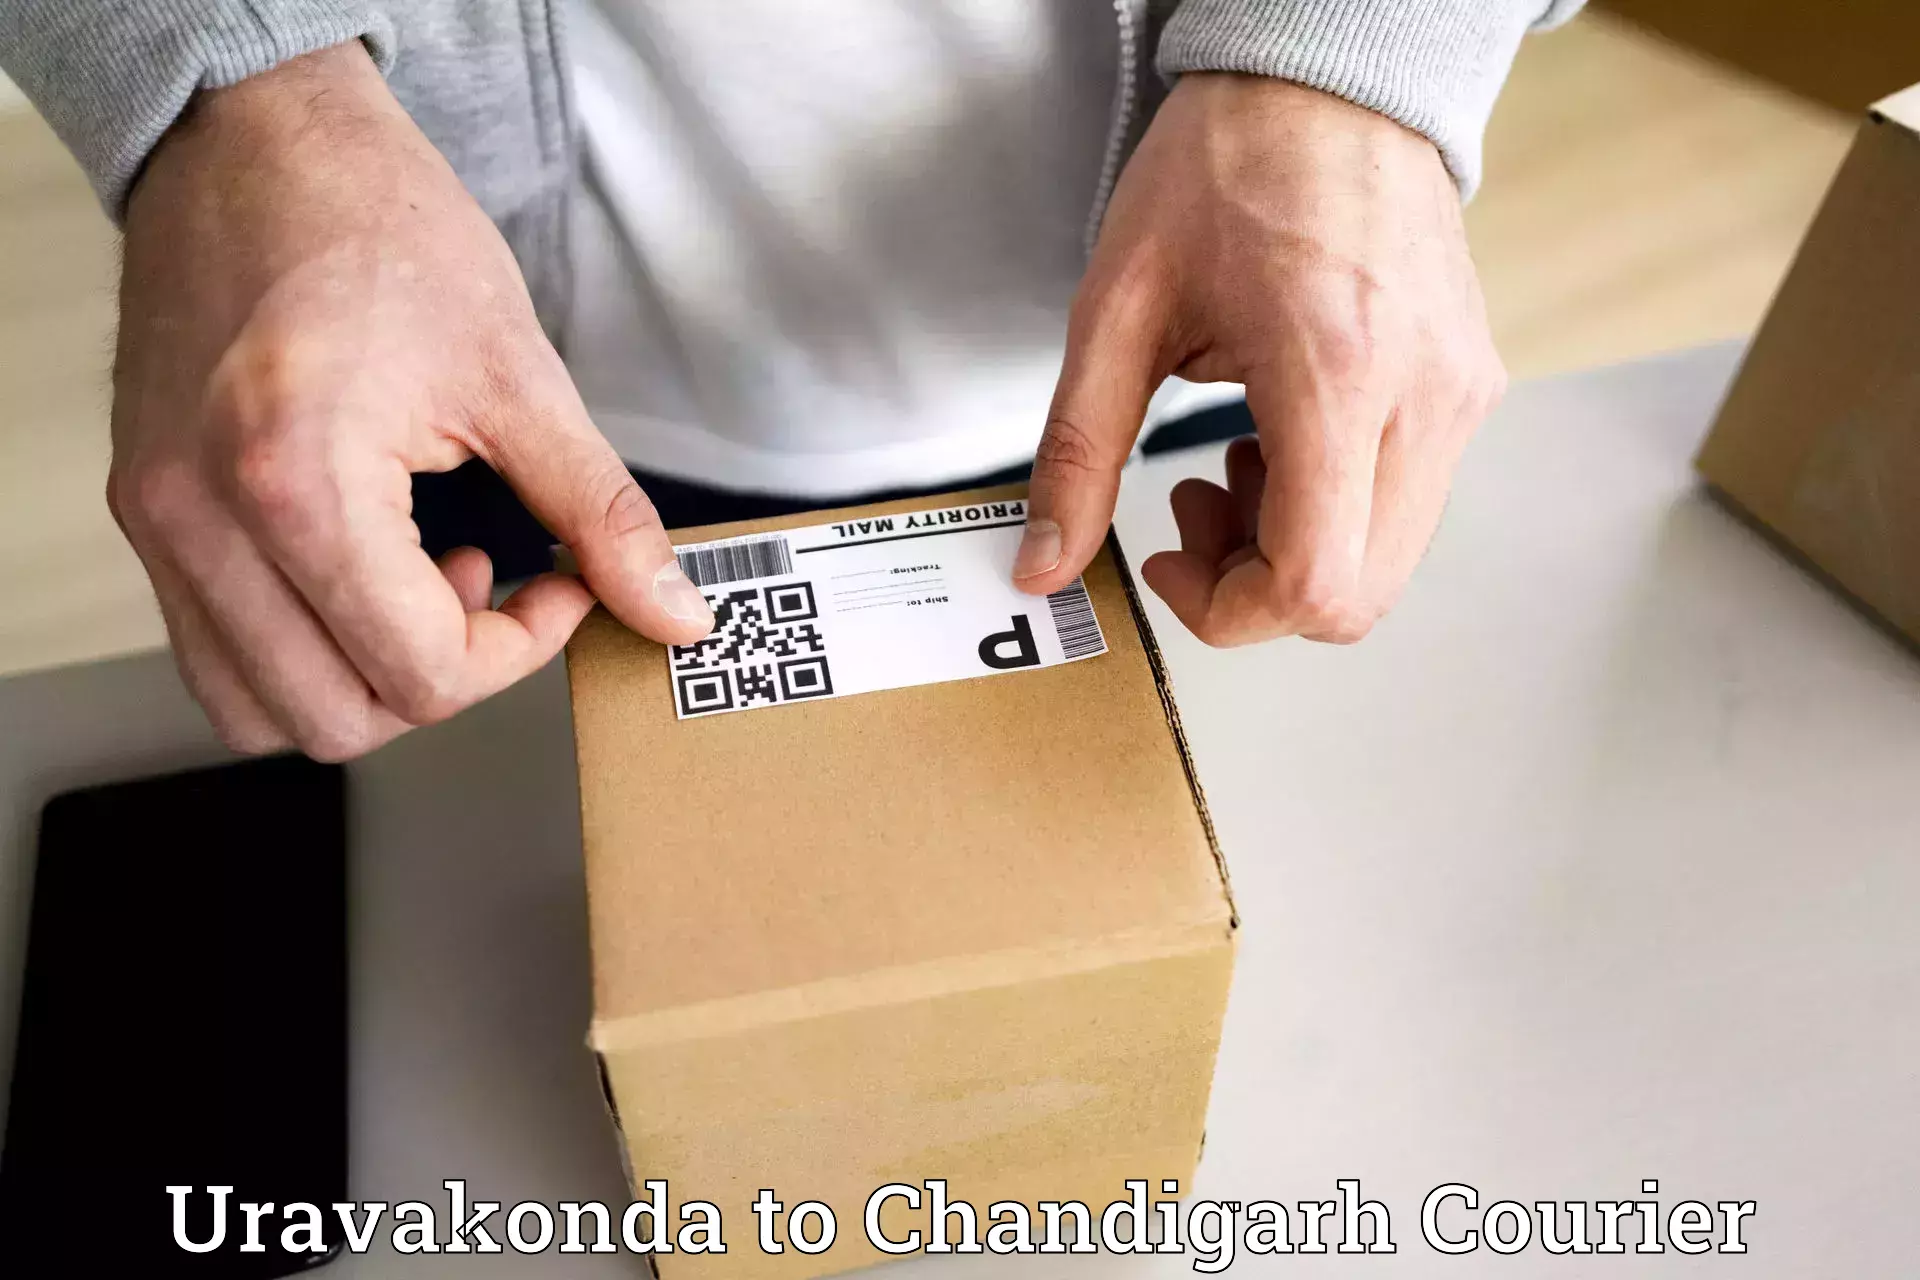 State-of-the-art courier technology Uravakonda to Chandigarh